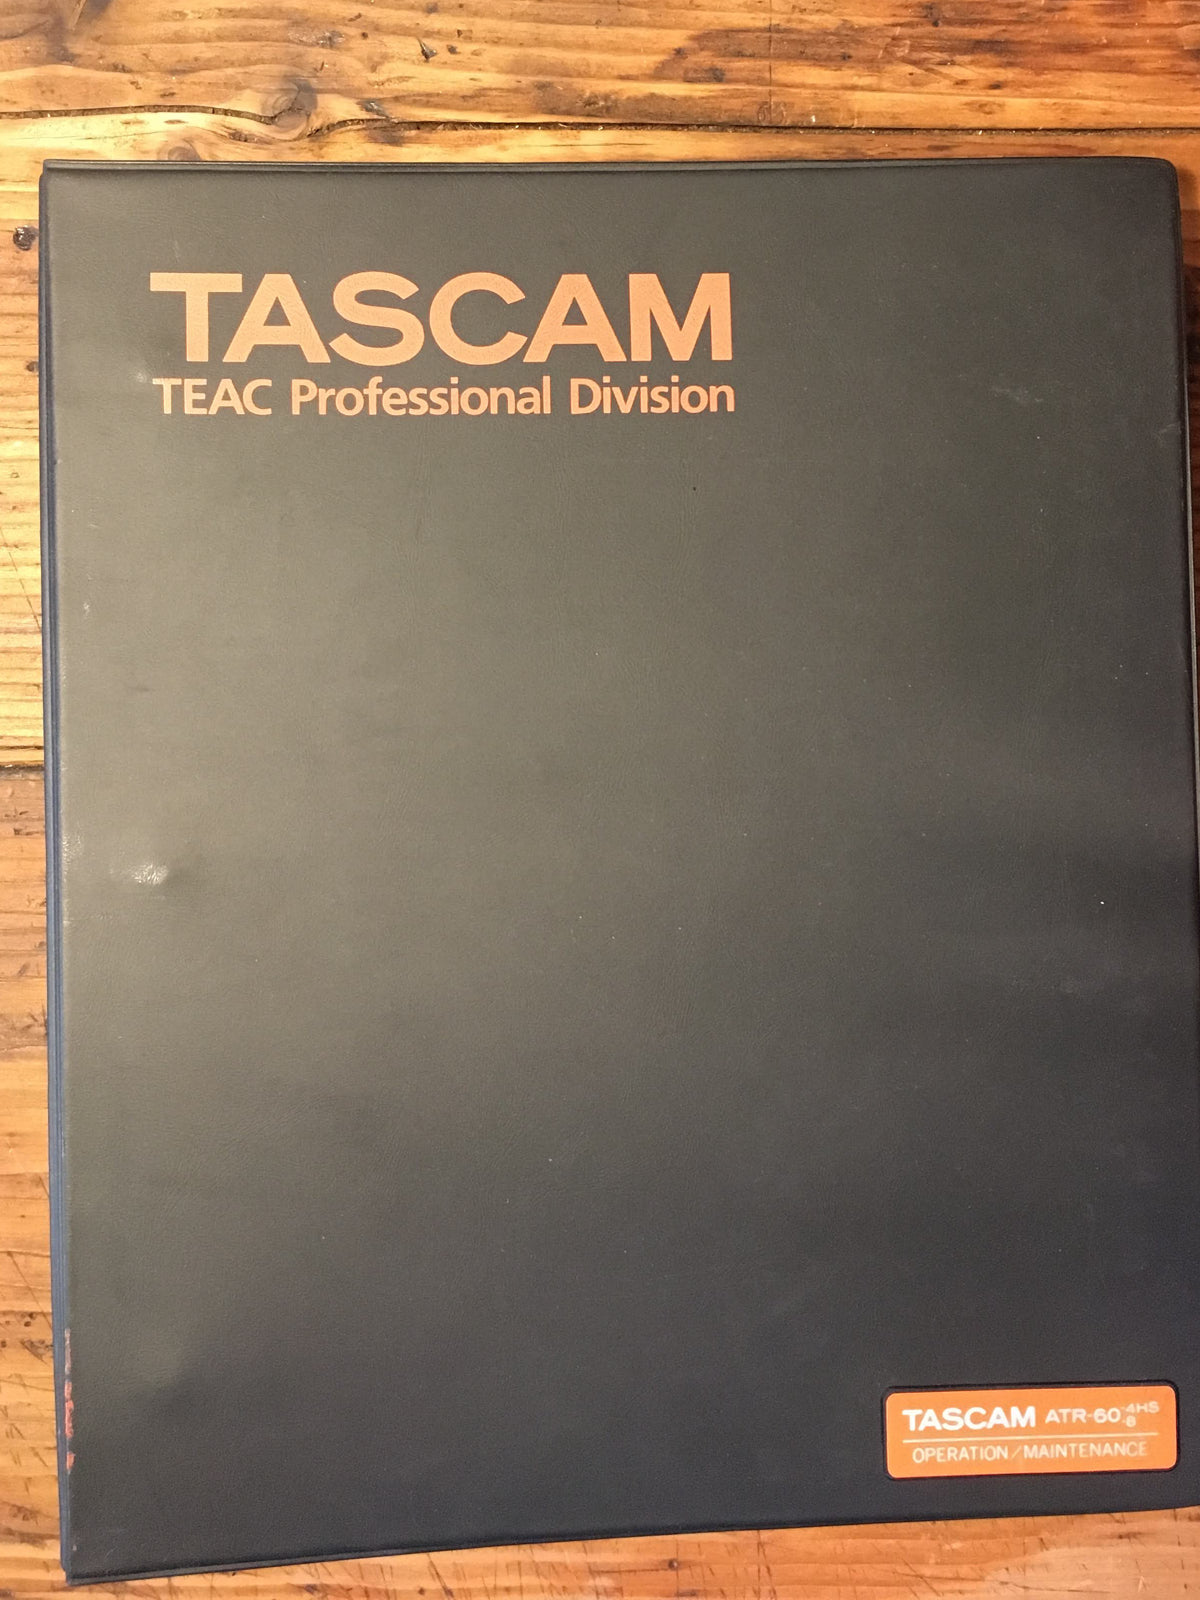 Teac / Tascam ATR-60 Reel to Reel Operation / Maintenance Manual *Original*